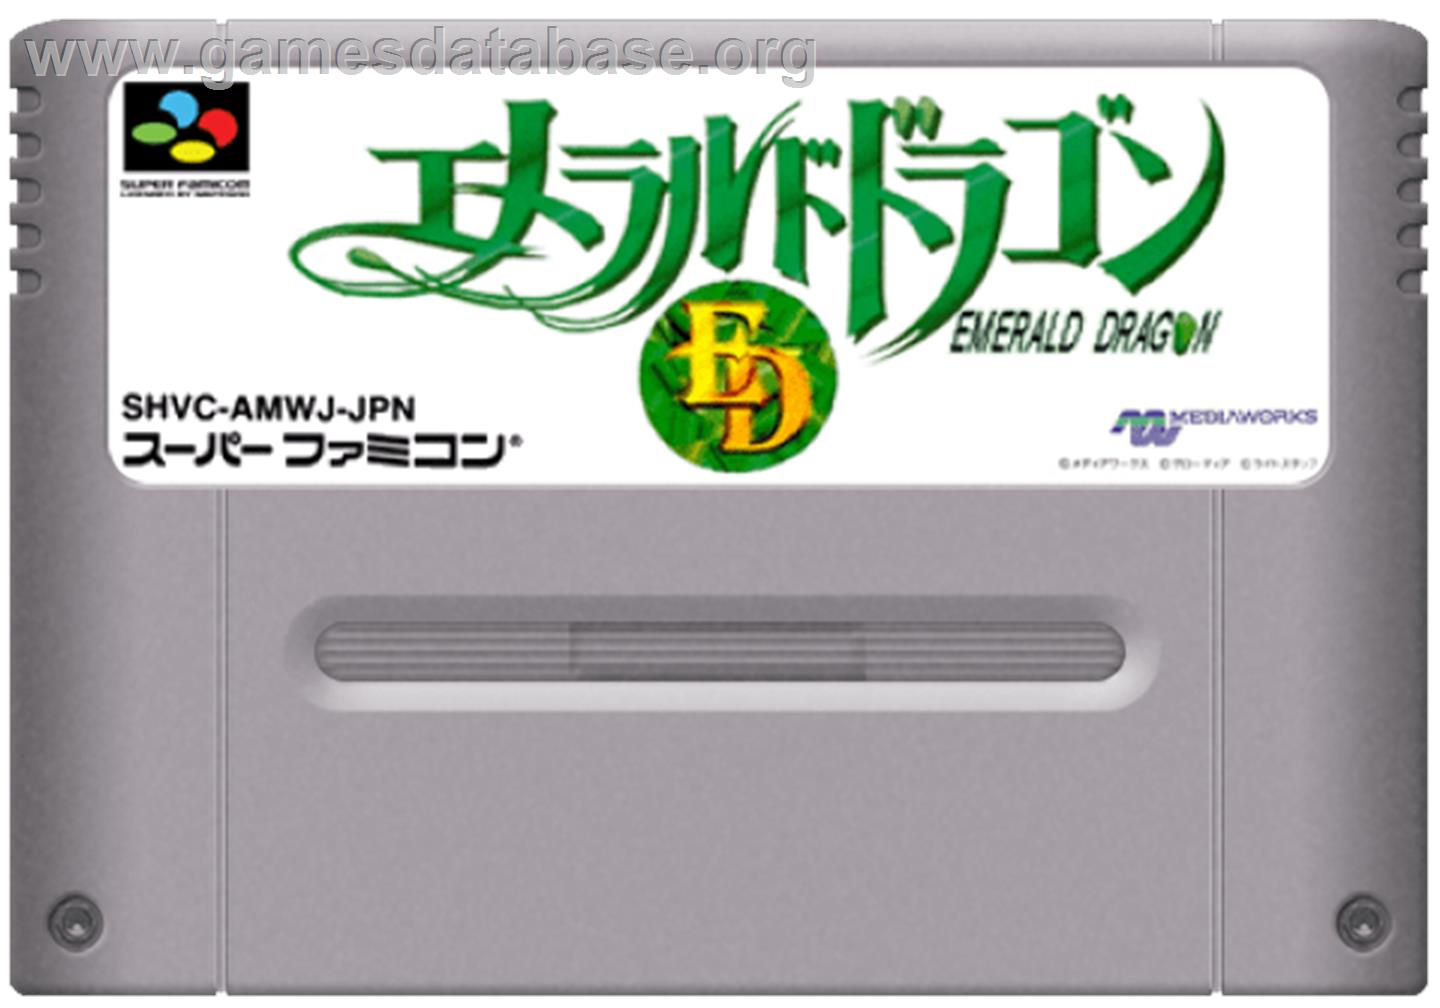 Emerald Dragon - Nintendo SNES - Artwork - Cartridge